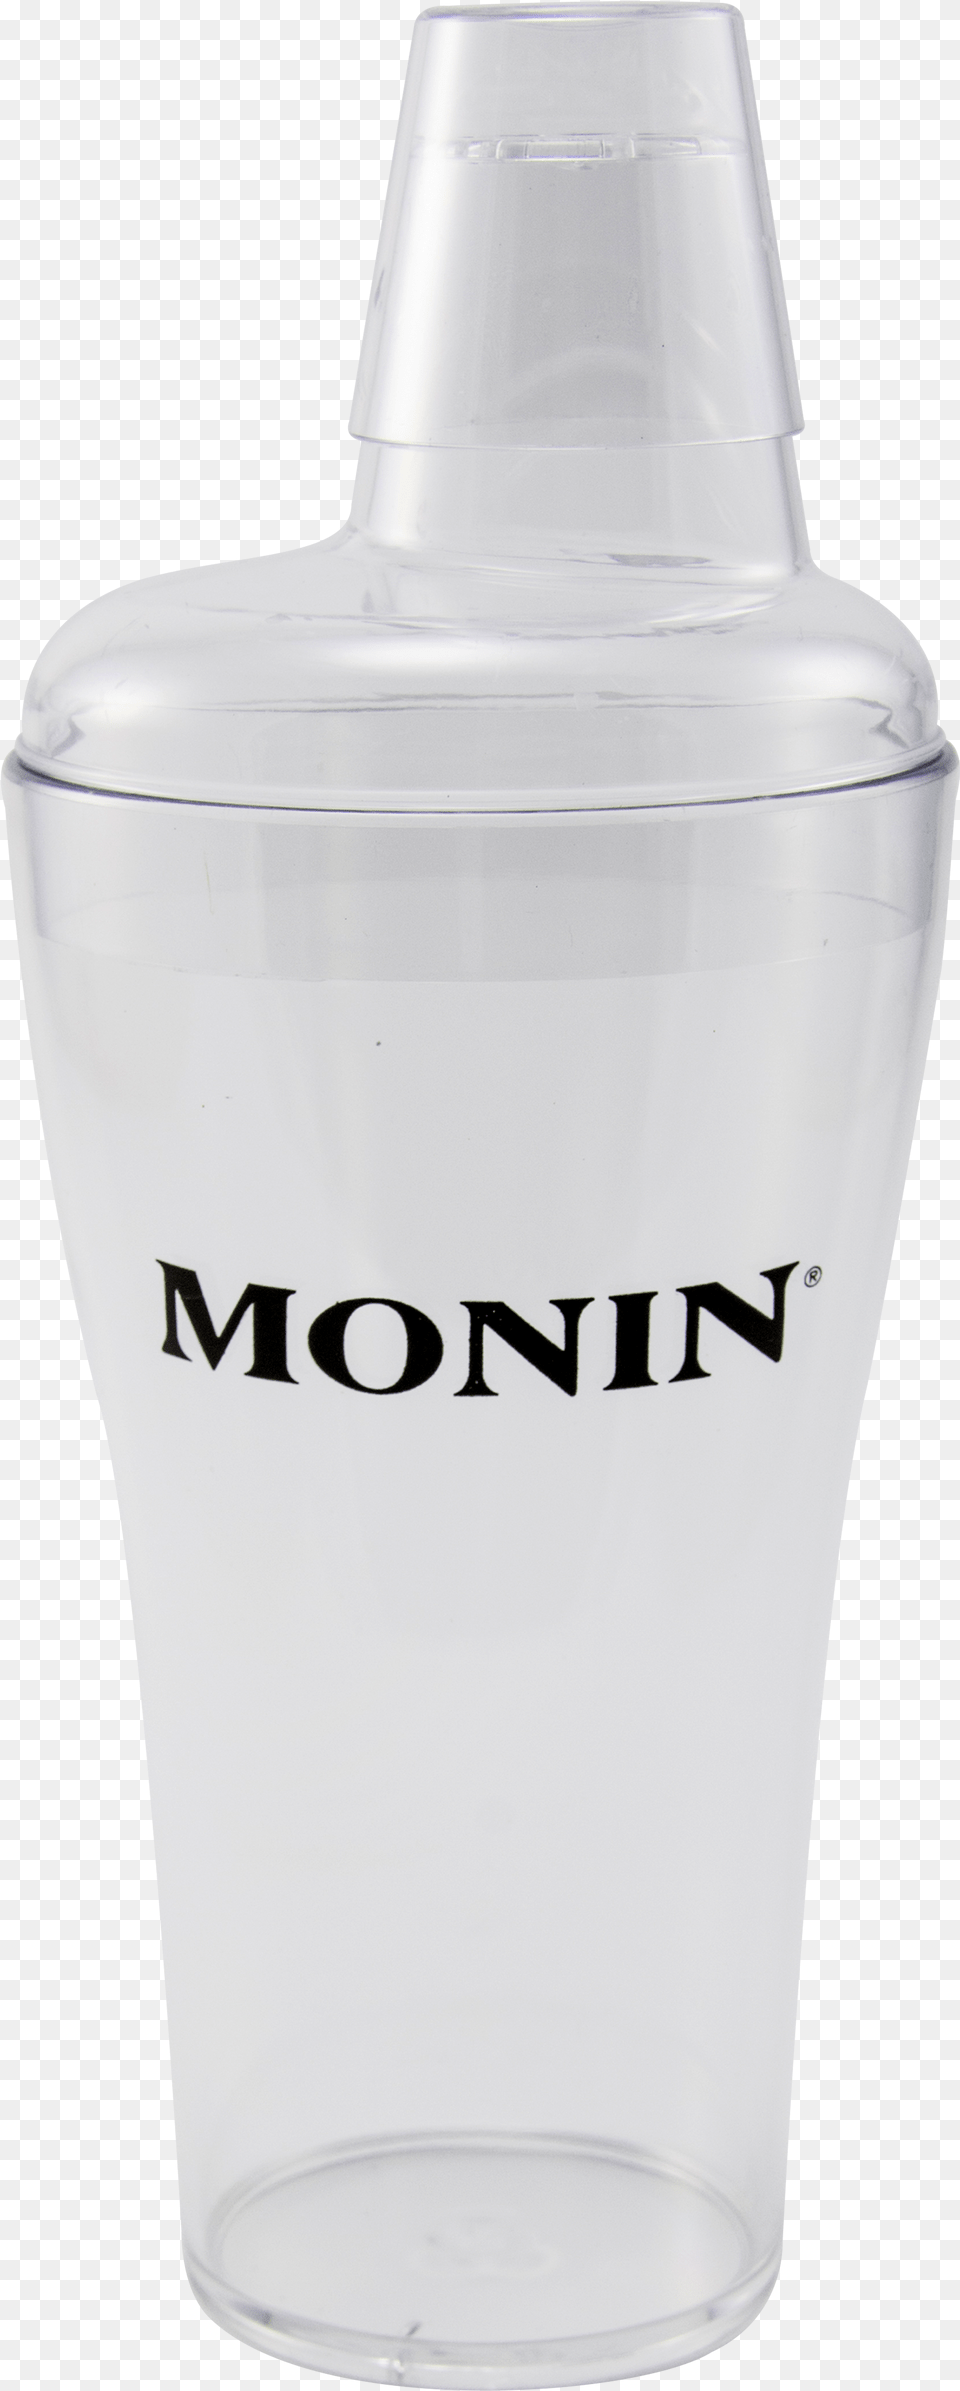 Clear Glass Monin, Bottle, Shaker Free Transparent Png